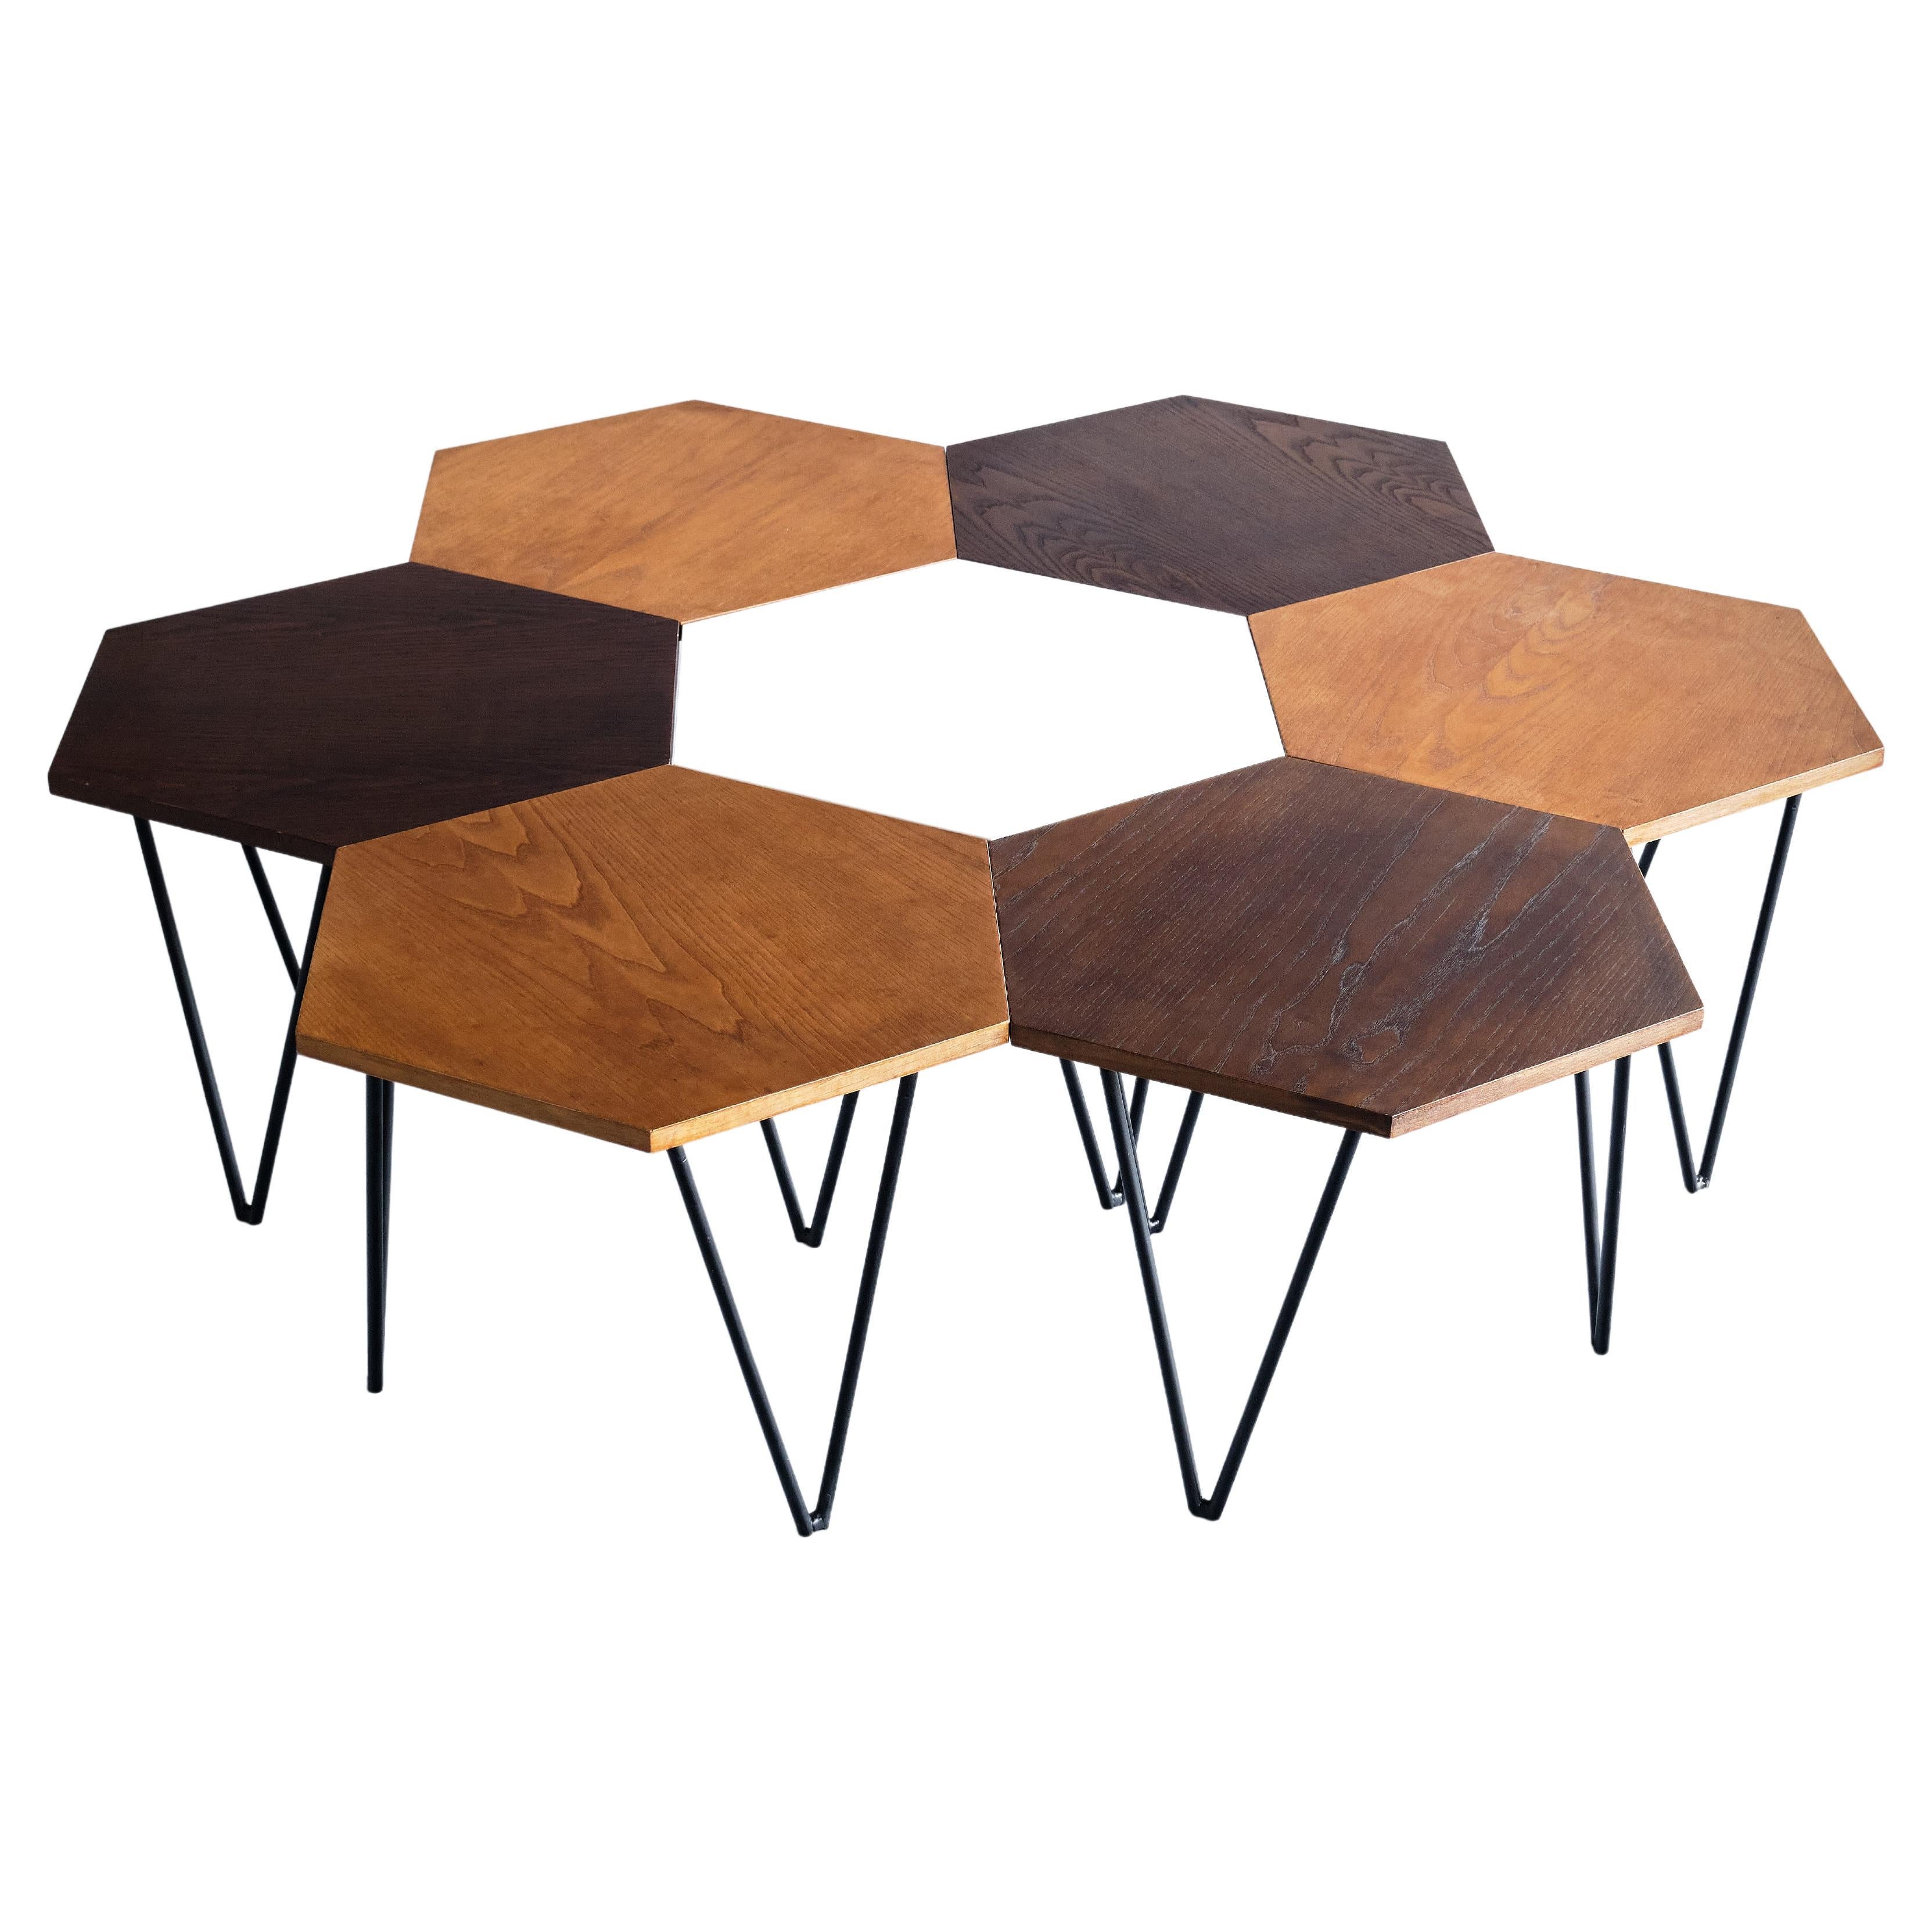 Set of 7 Gio Ponti Modular Hexagonal Coffee Tables, ISA Bergamo, Italy, 1950s For Sale